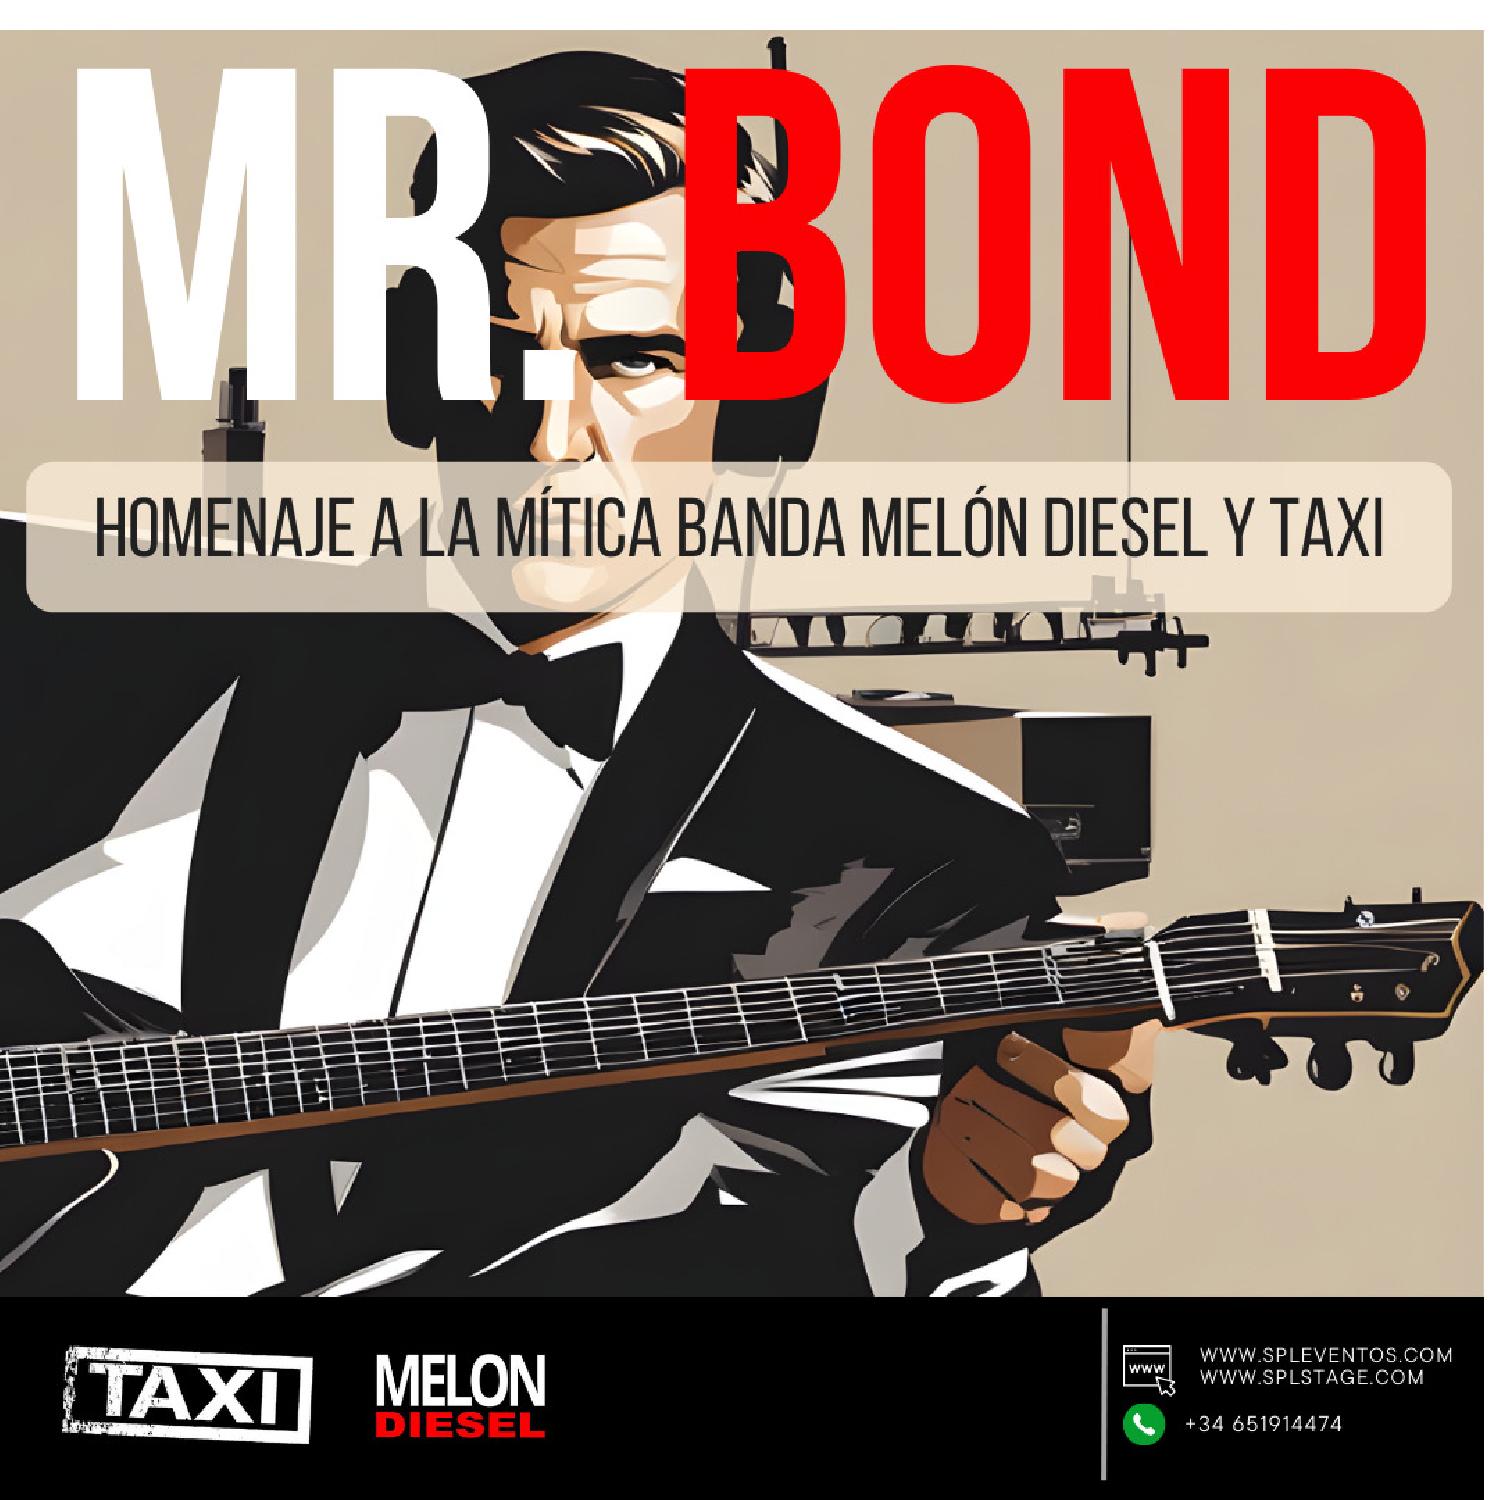 Mr Bond - Homenaje a Melón Diesel / Taxi 